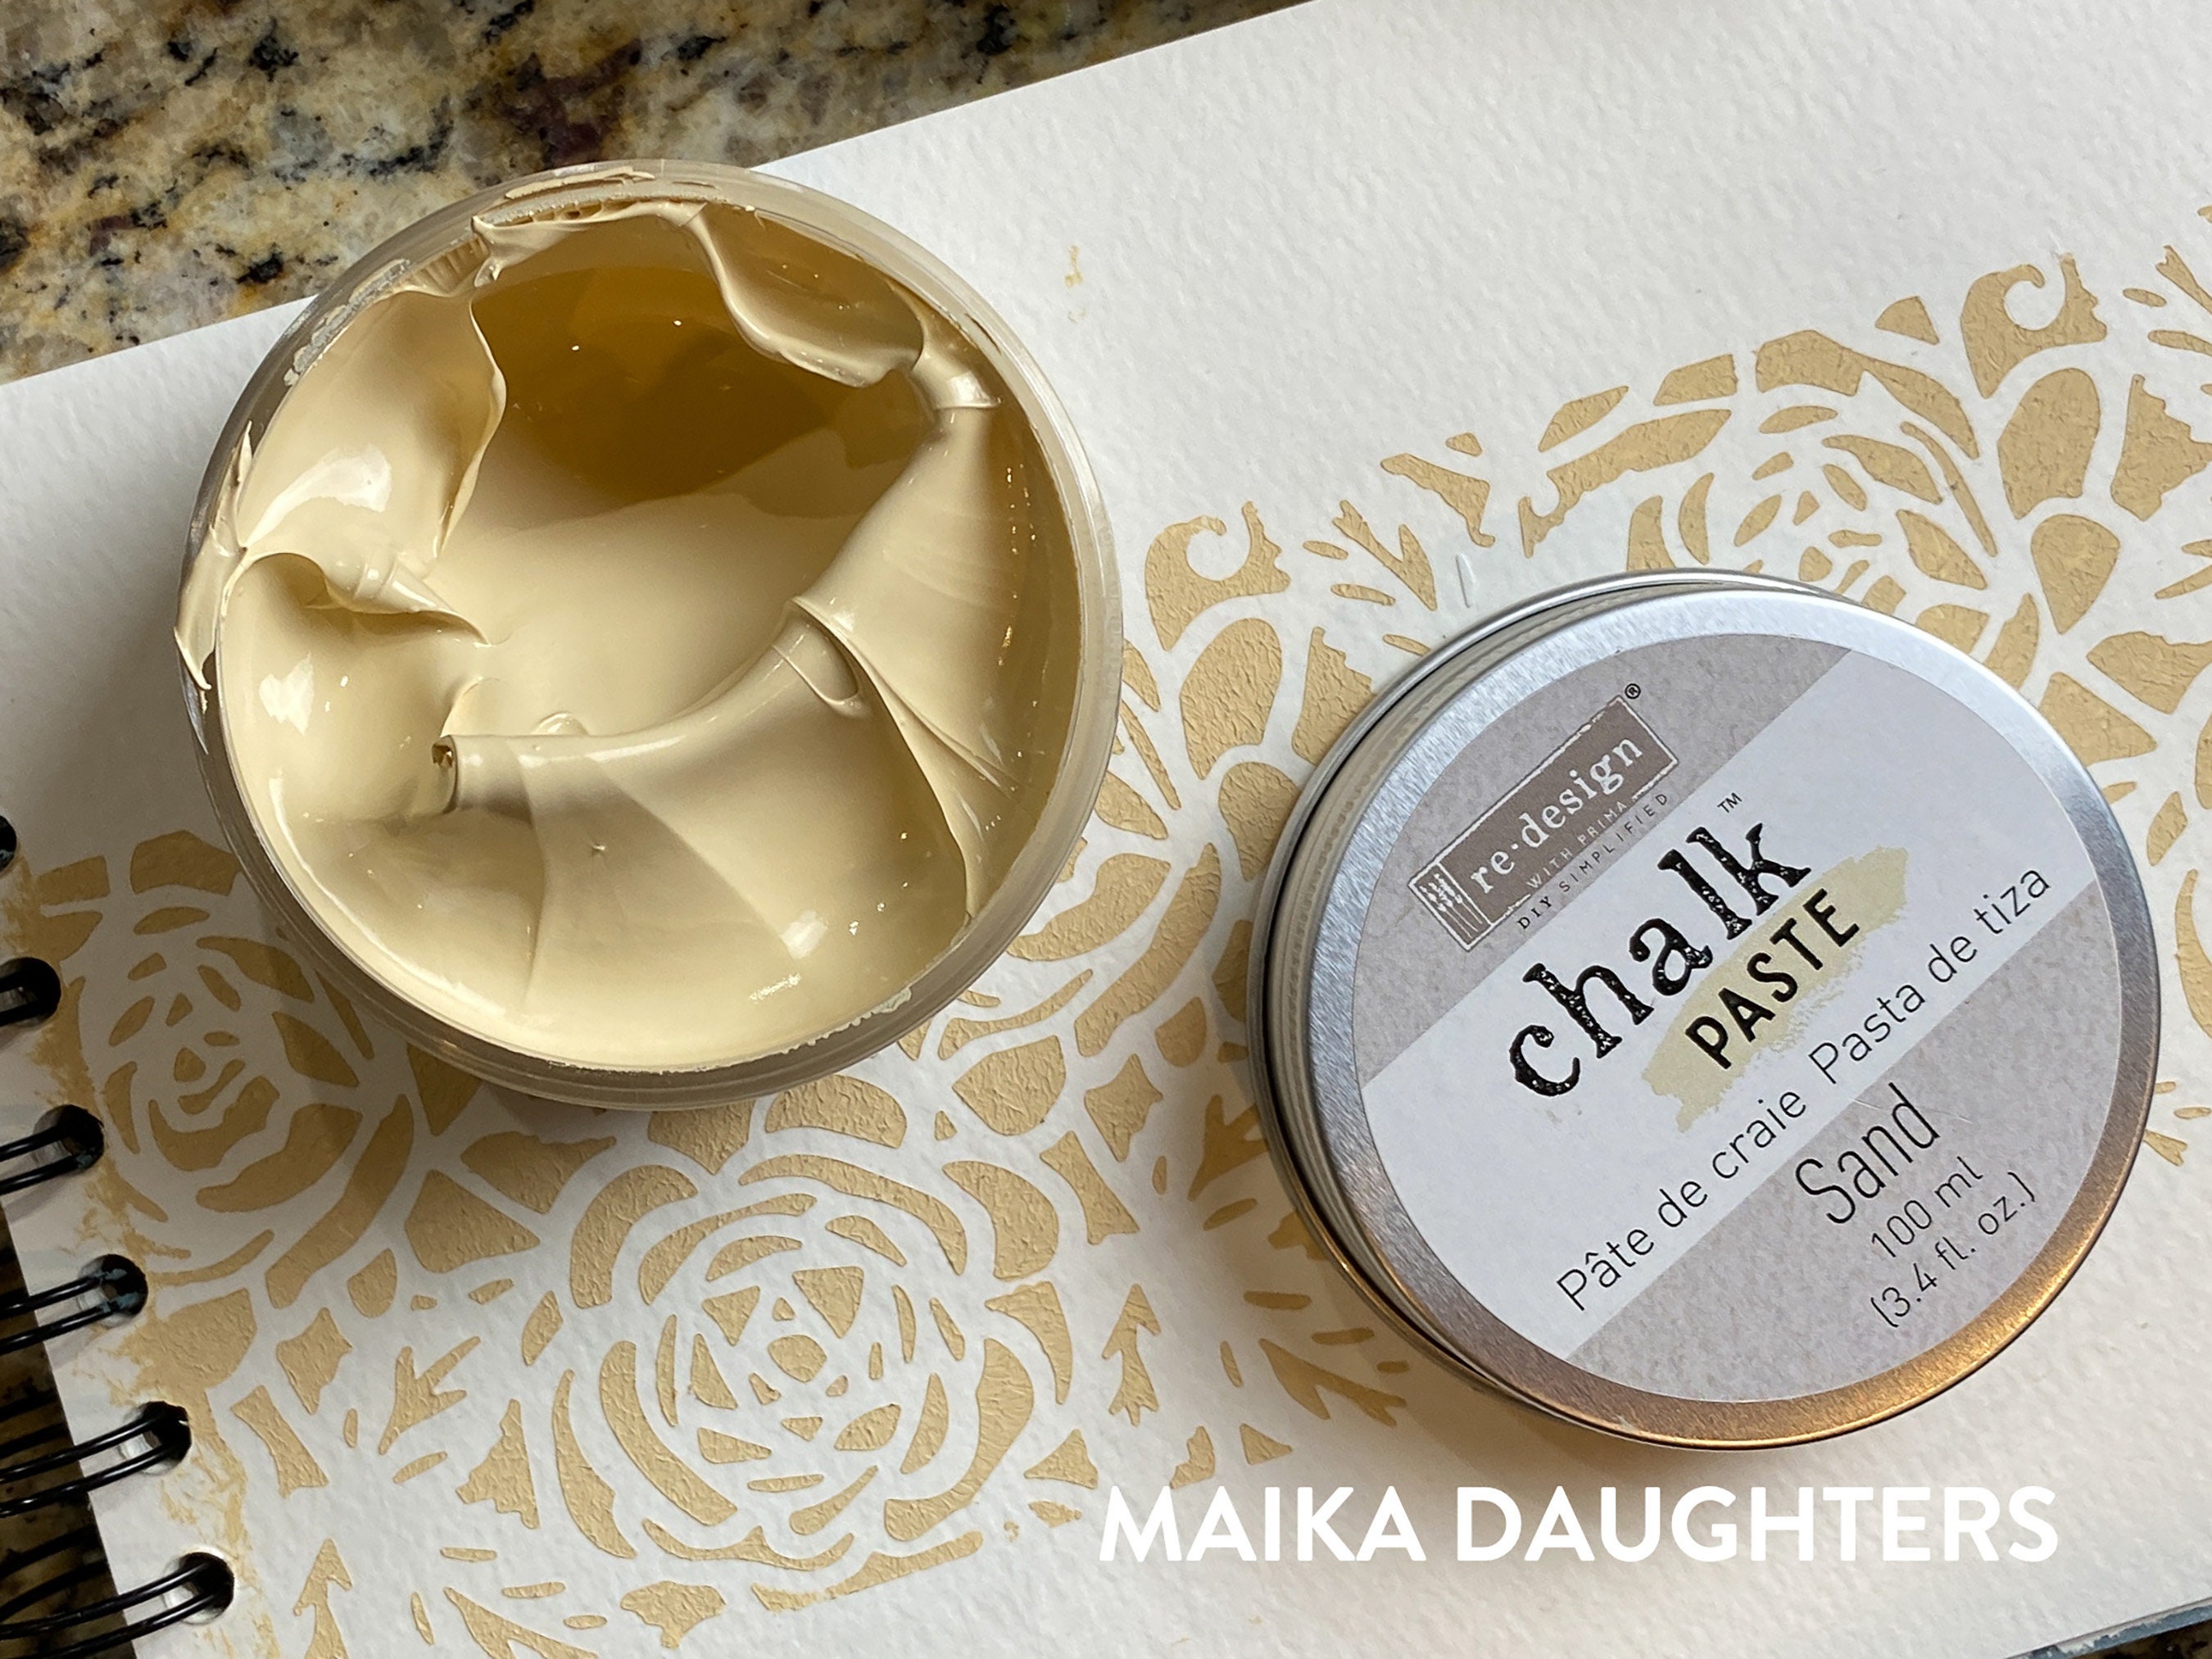 Redesign Chalk Paste® 3.4 Fl. Oz. (100Ml)-Chalky White Paint Ink